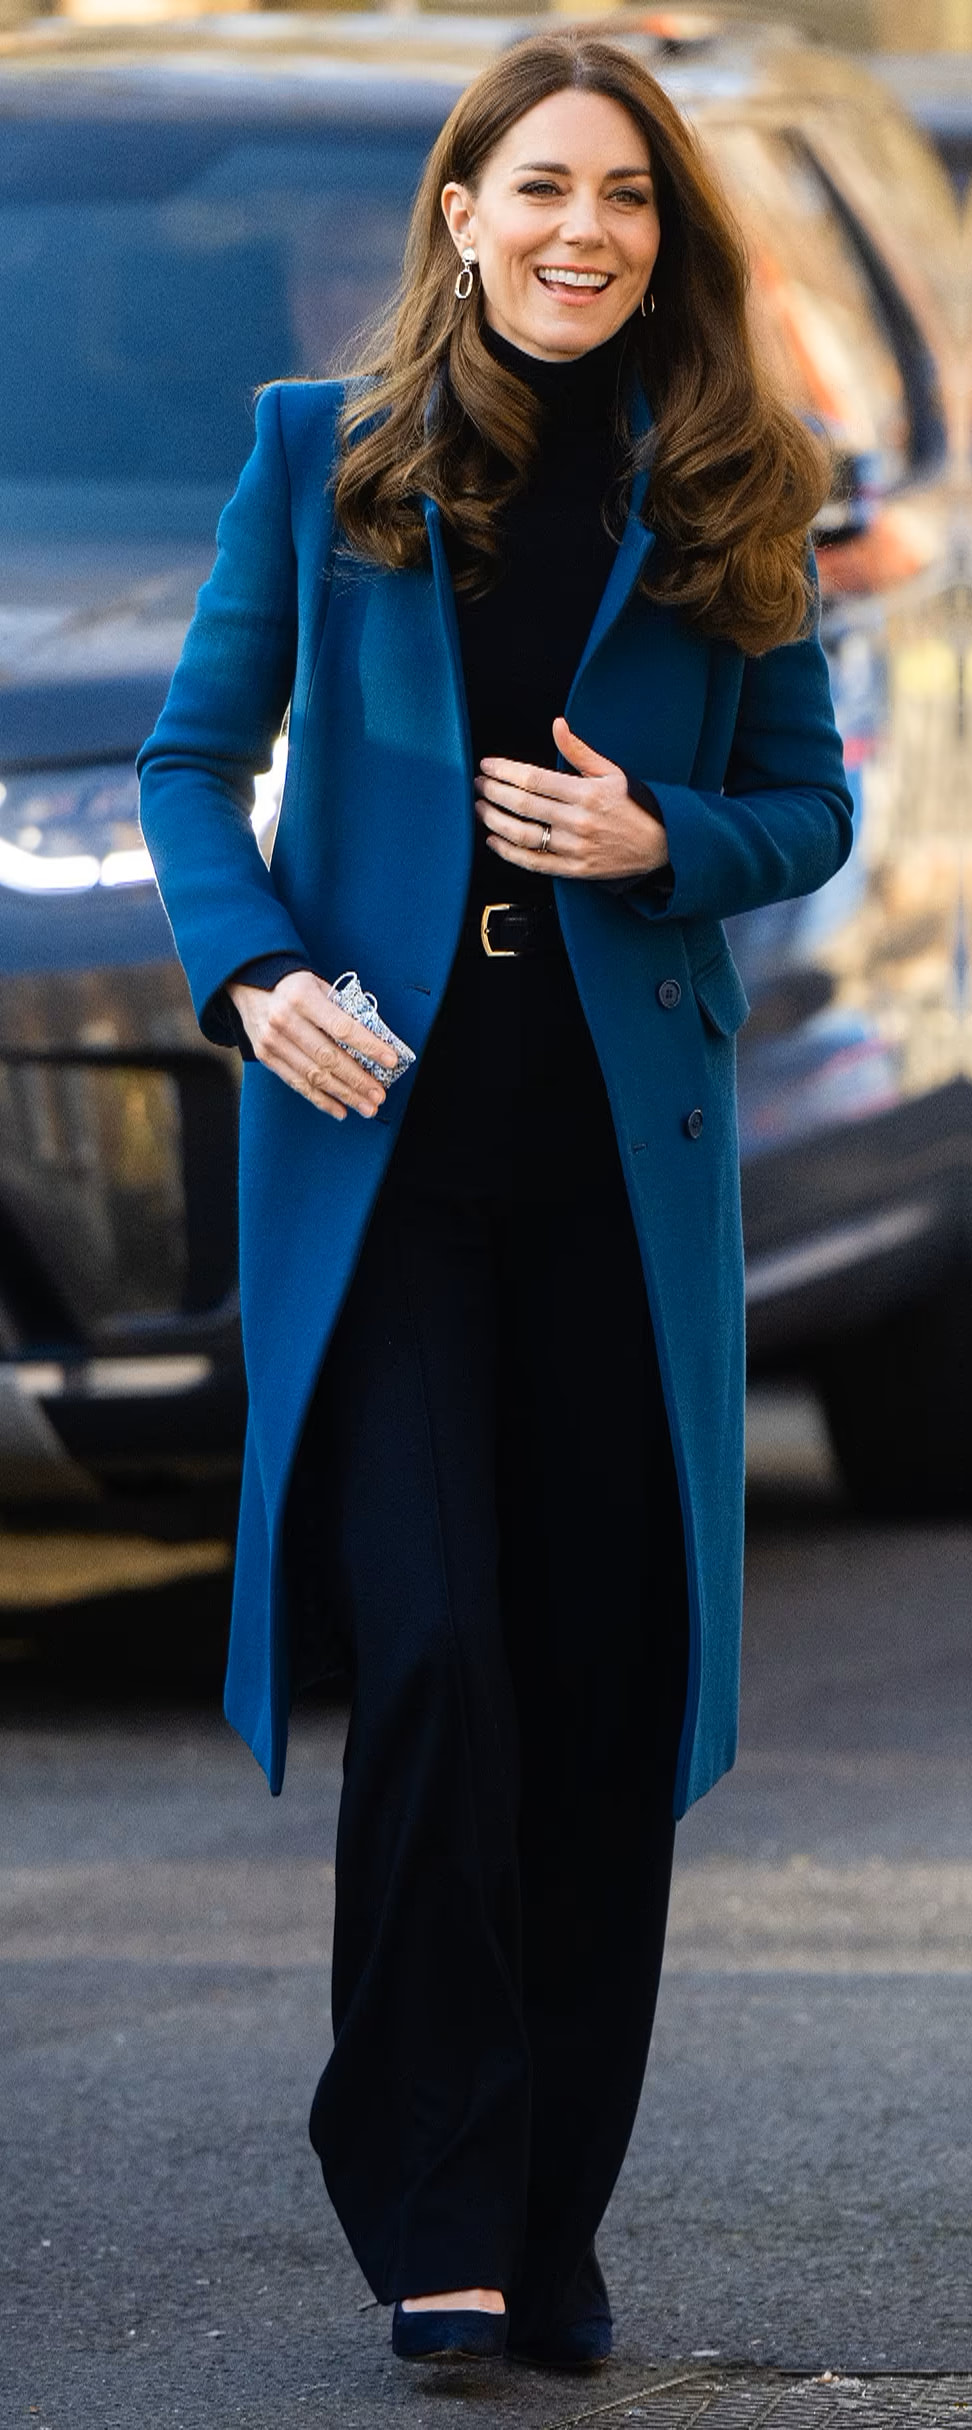 Hobbs Lara Merino Wool Roll Neck Sweater in Navy as seen on Kate Middleton, The Duchess of Cambridge.